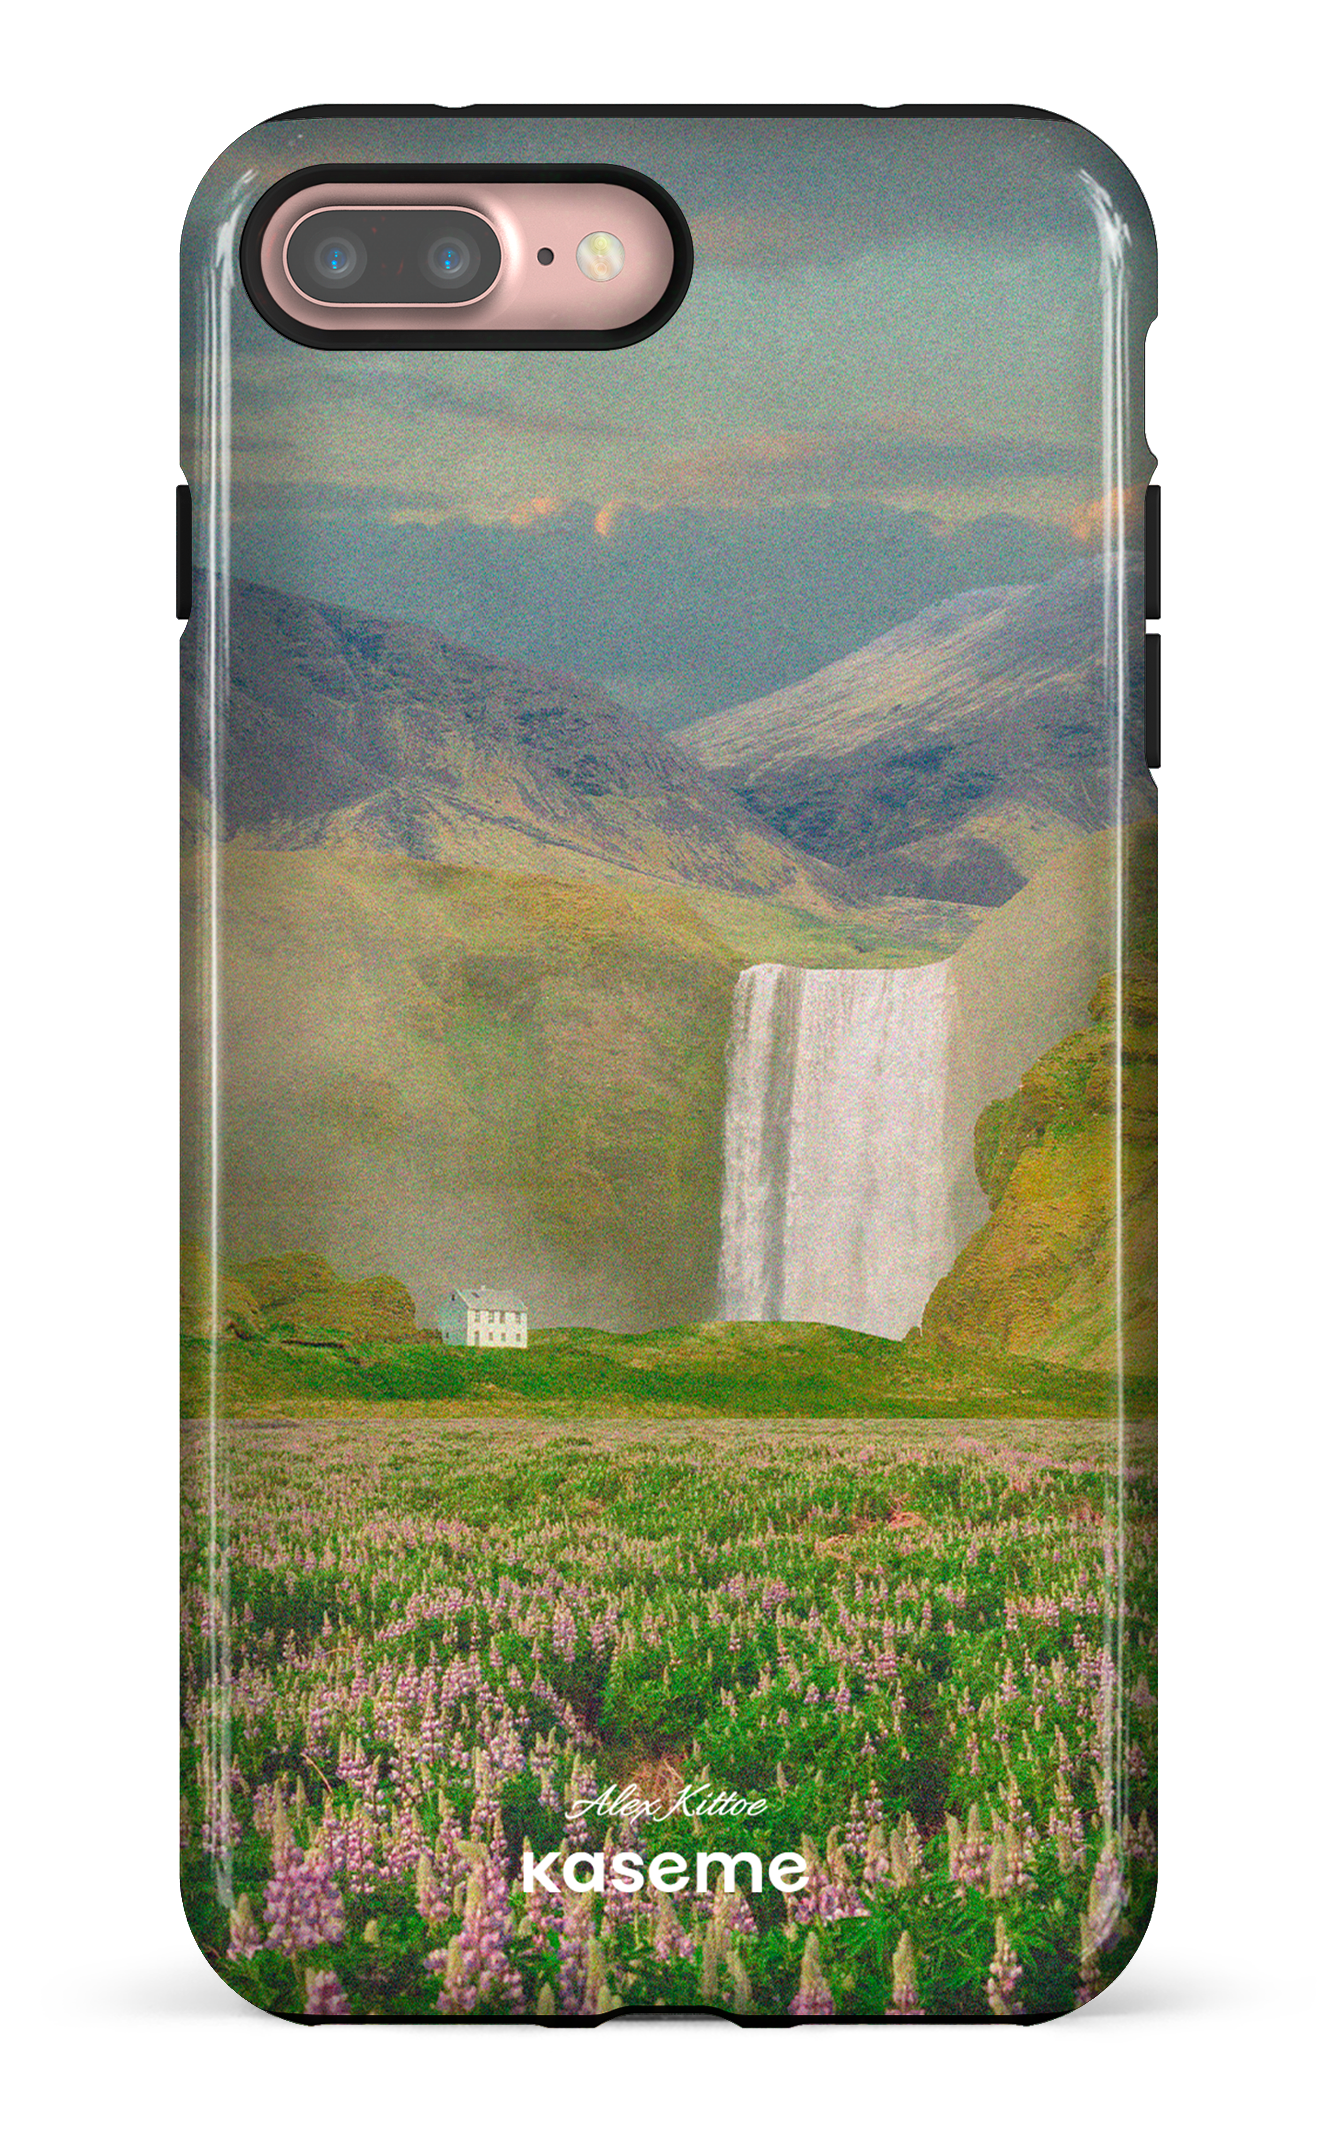 Where The Wildflowers Grow by Alex Kittoe - iPhone 7 Plus